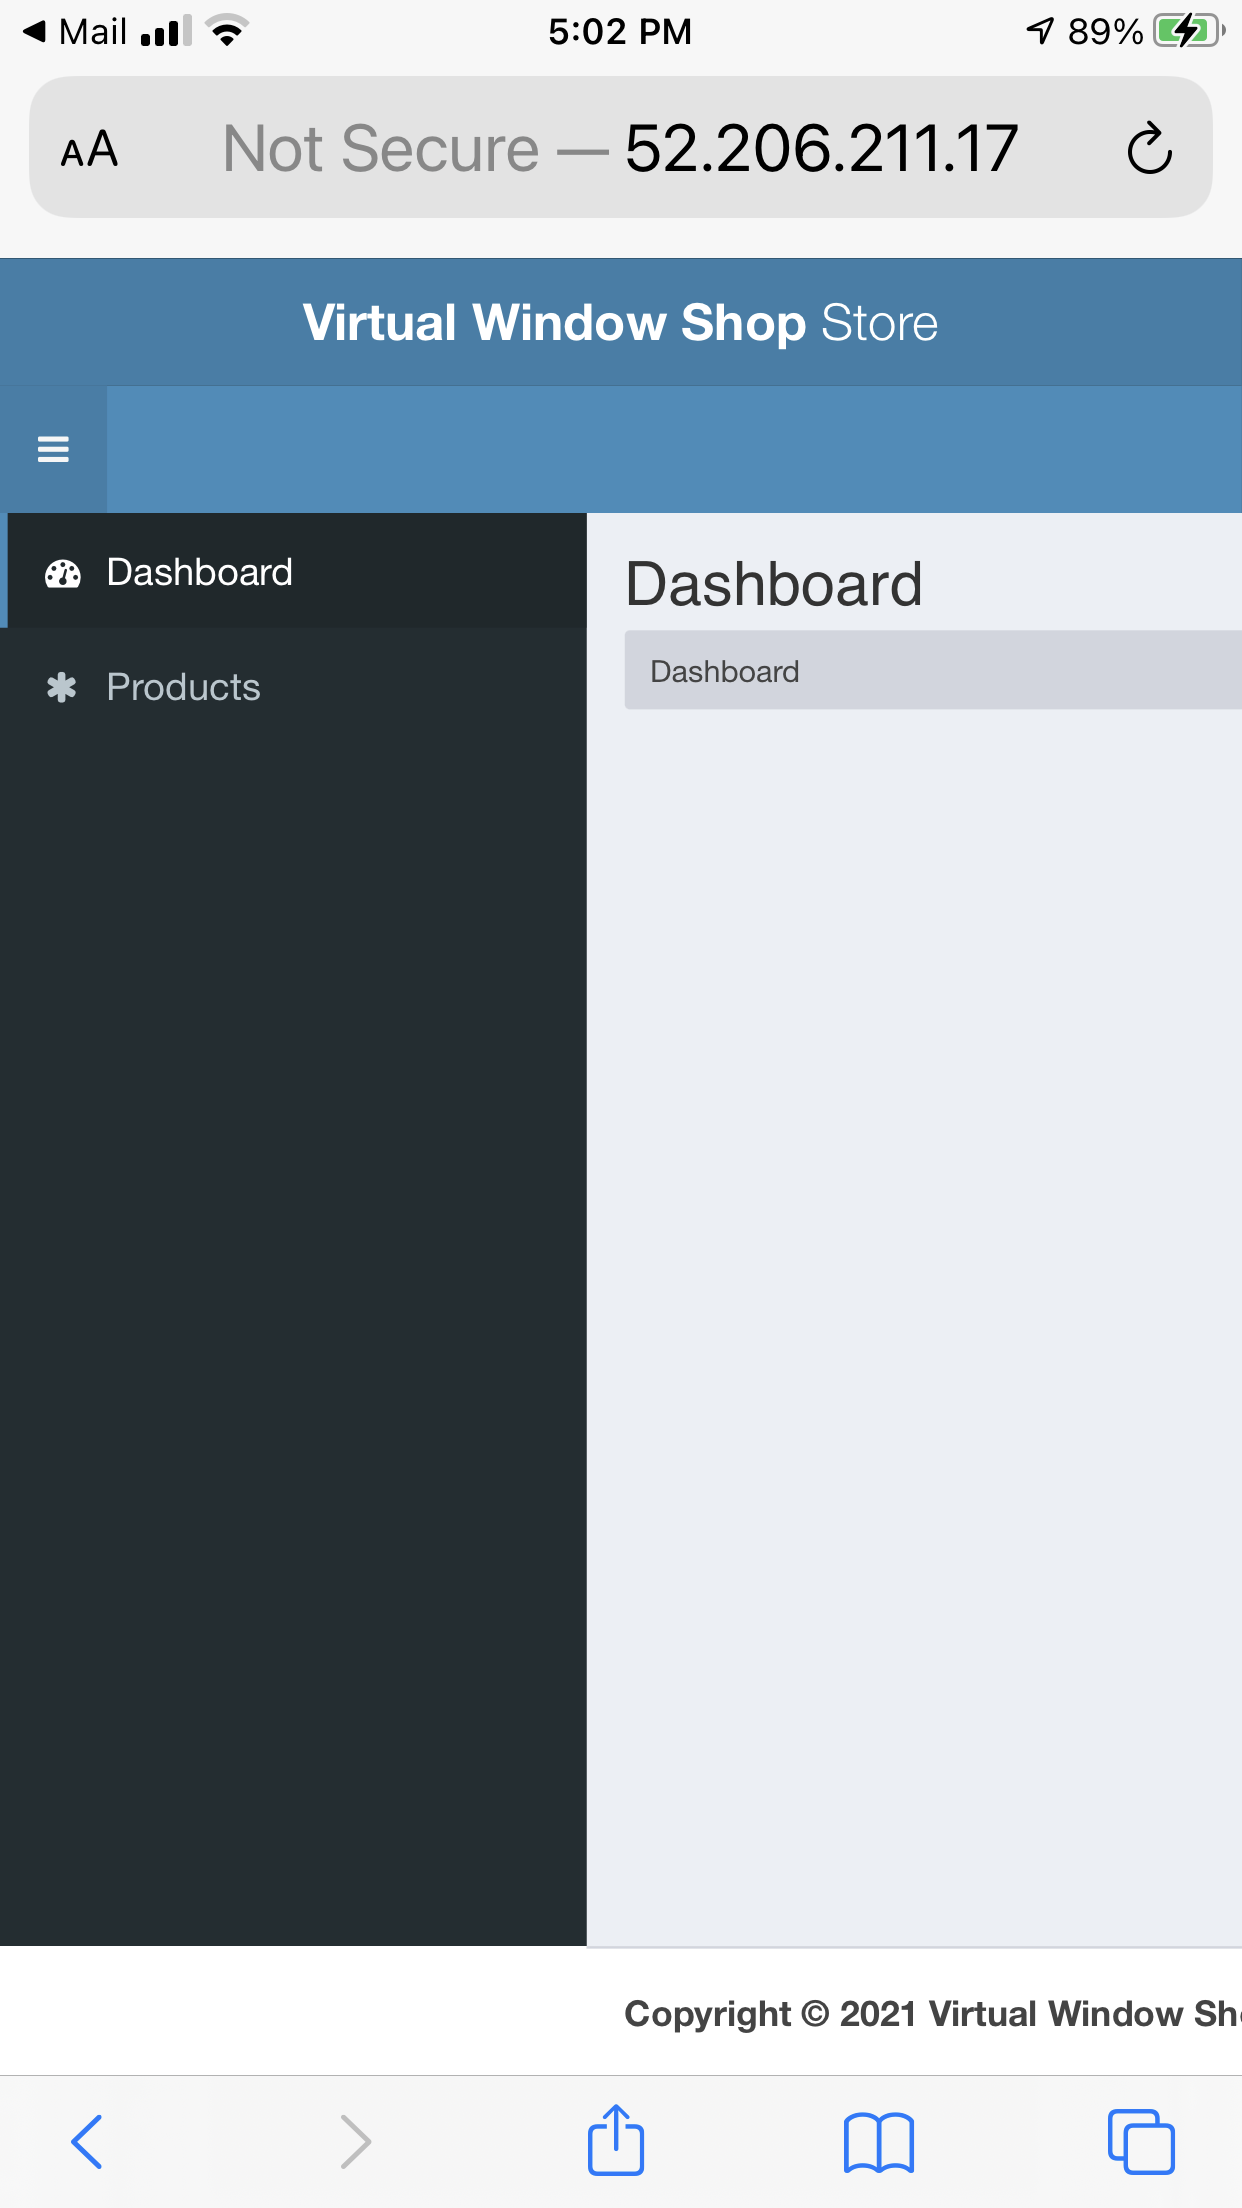 Vendor Dashboard navigation display for the Virtual Window Shop application